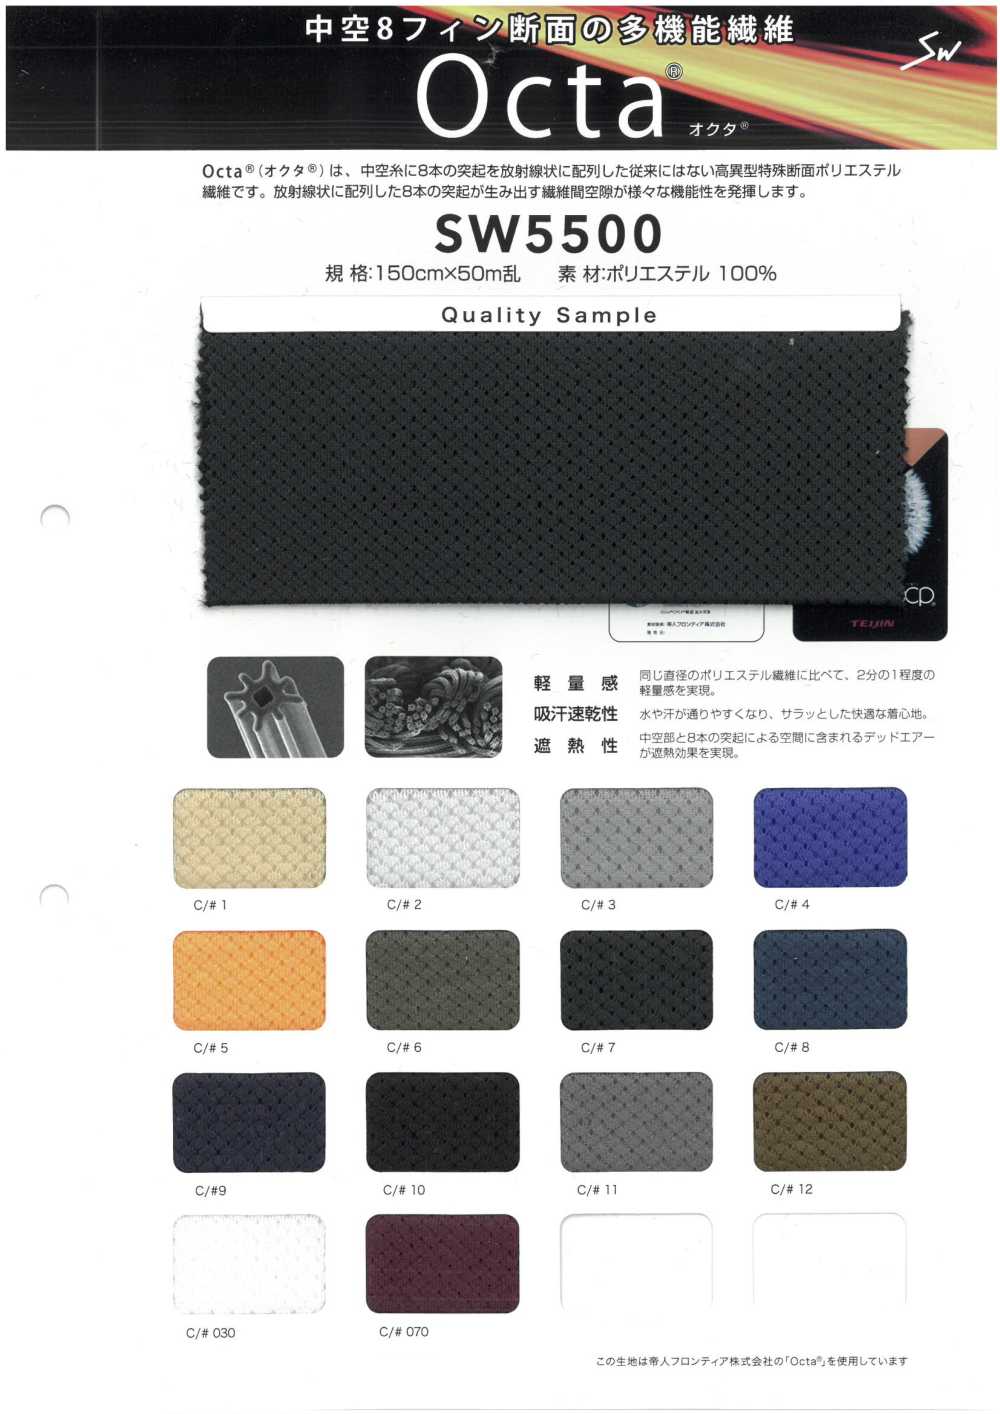 SW5500 Octa®オクタ®[生地] 三和繊維